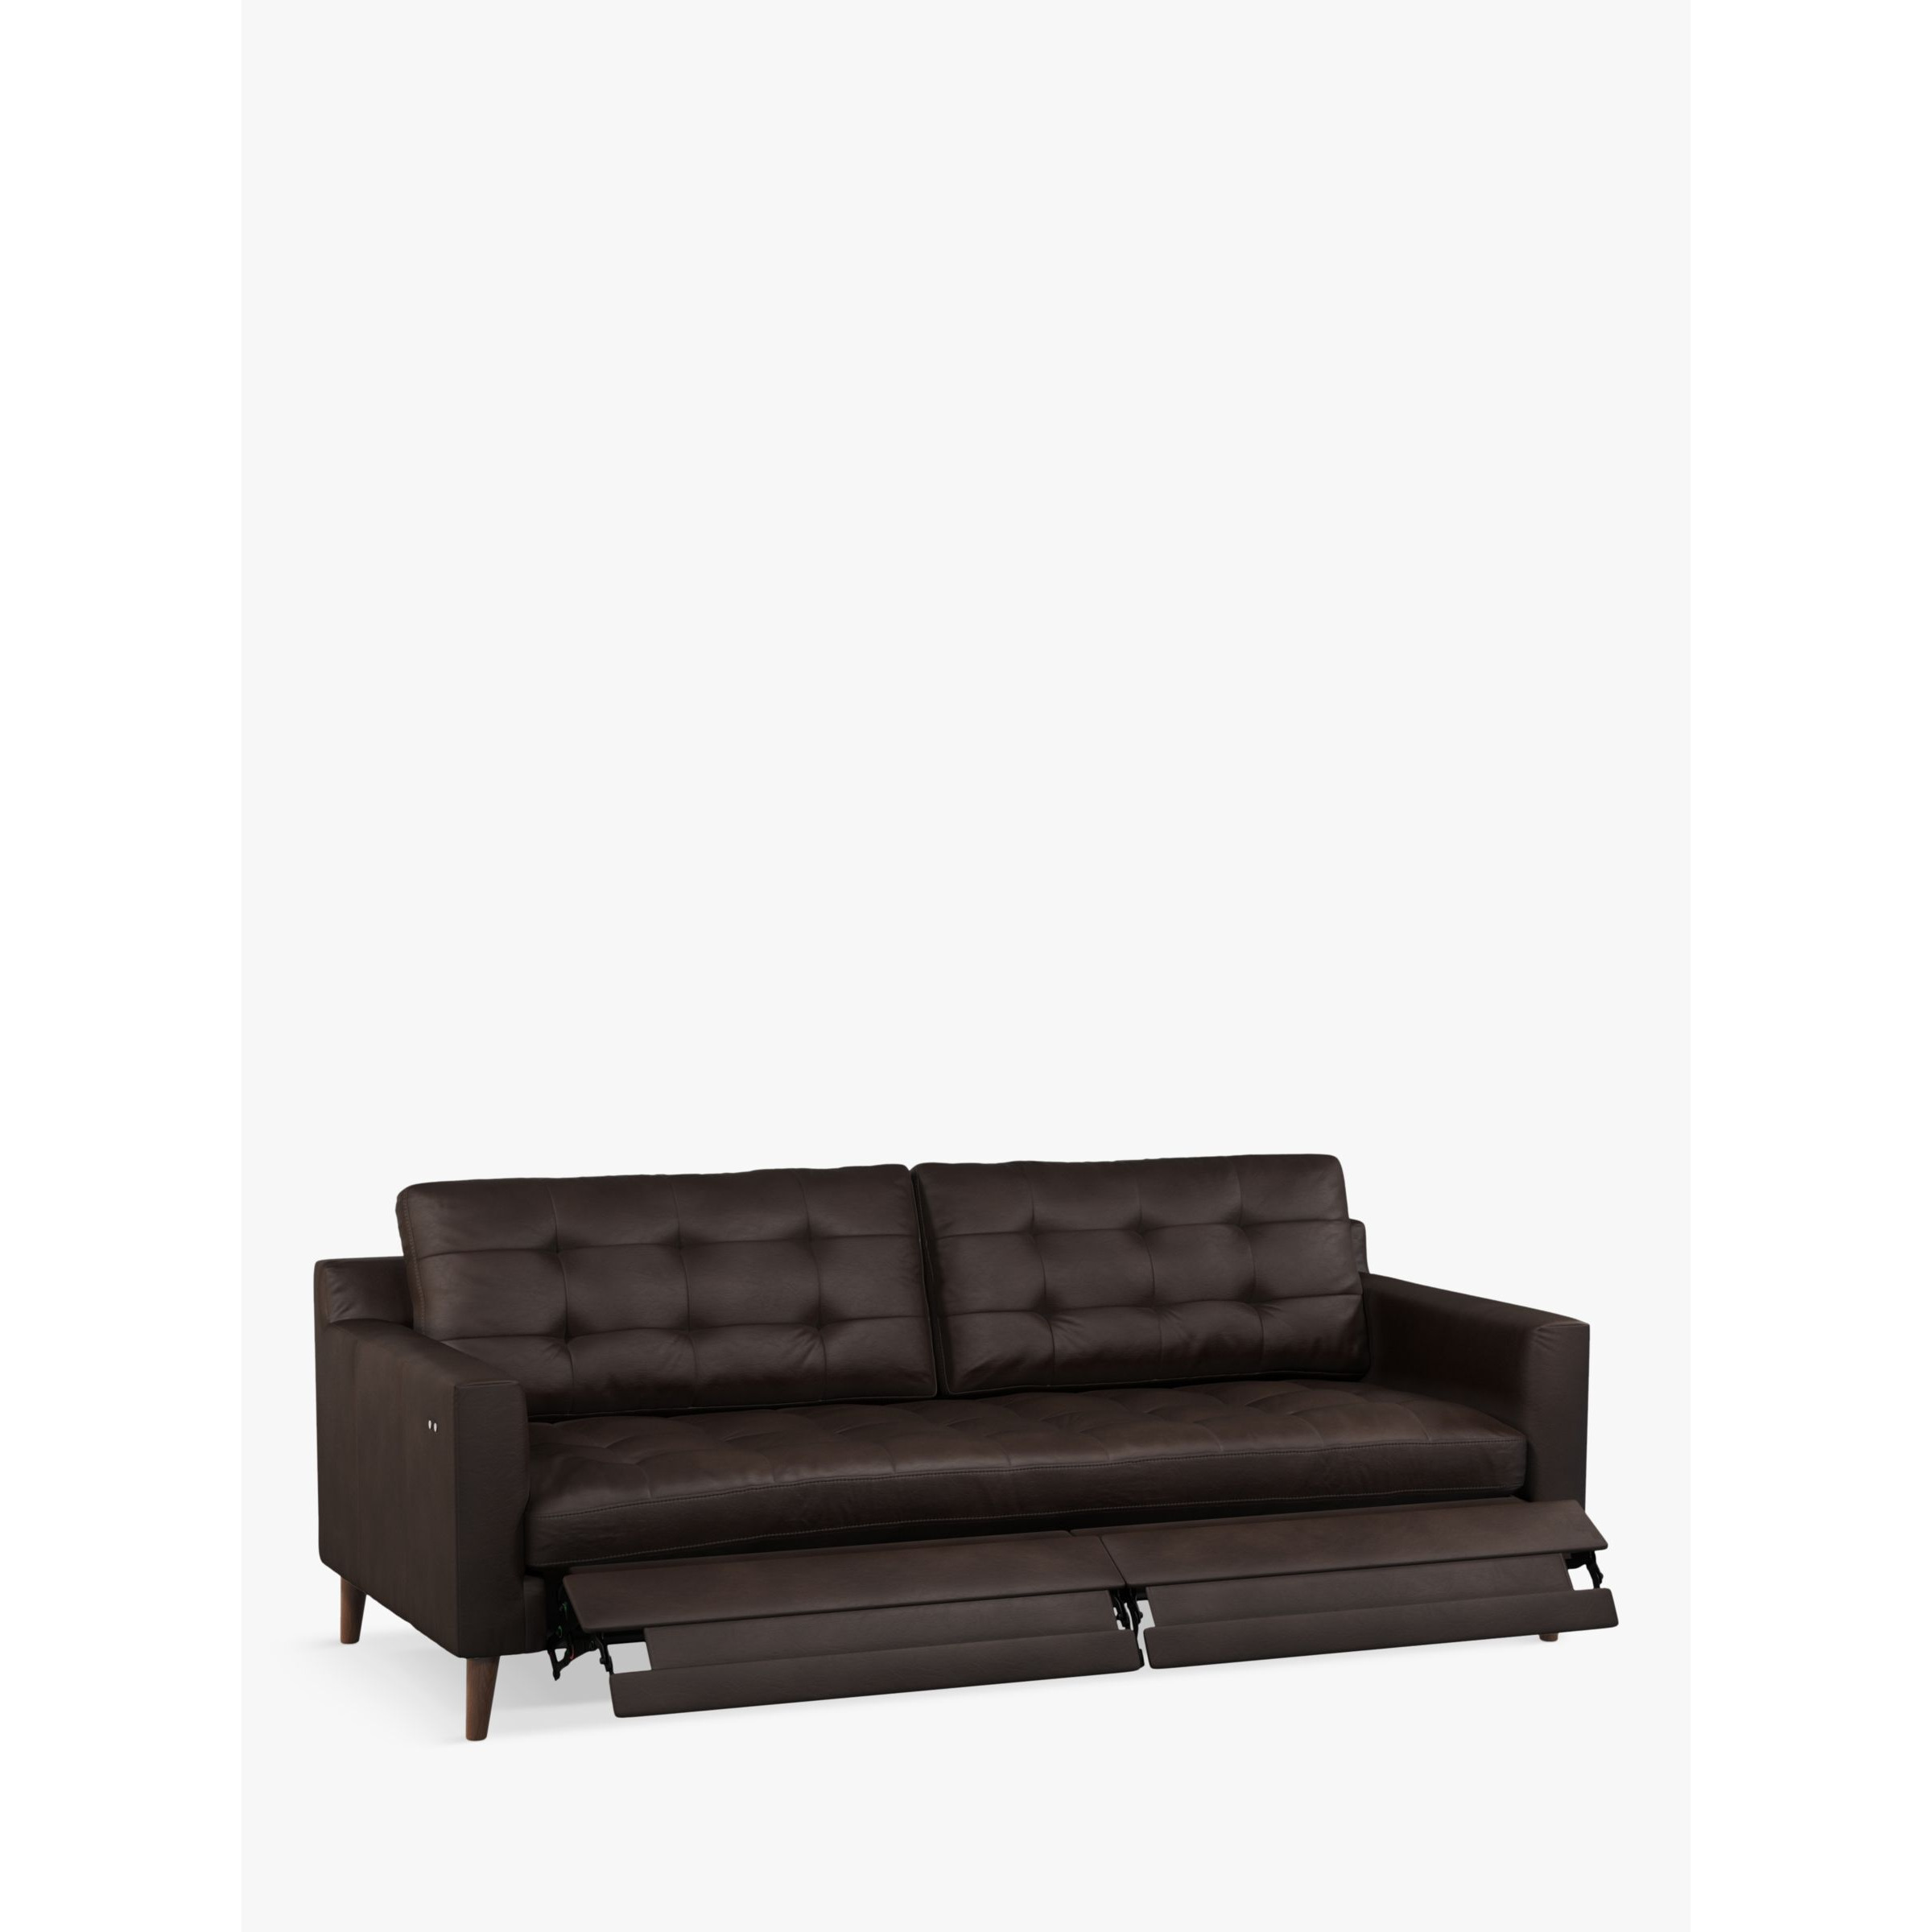 John Lewis Draper Motion Large 3 Seater Leather Sofa with Footrest Mechanism, Dark Leg - image 1